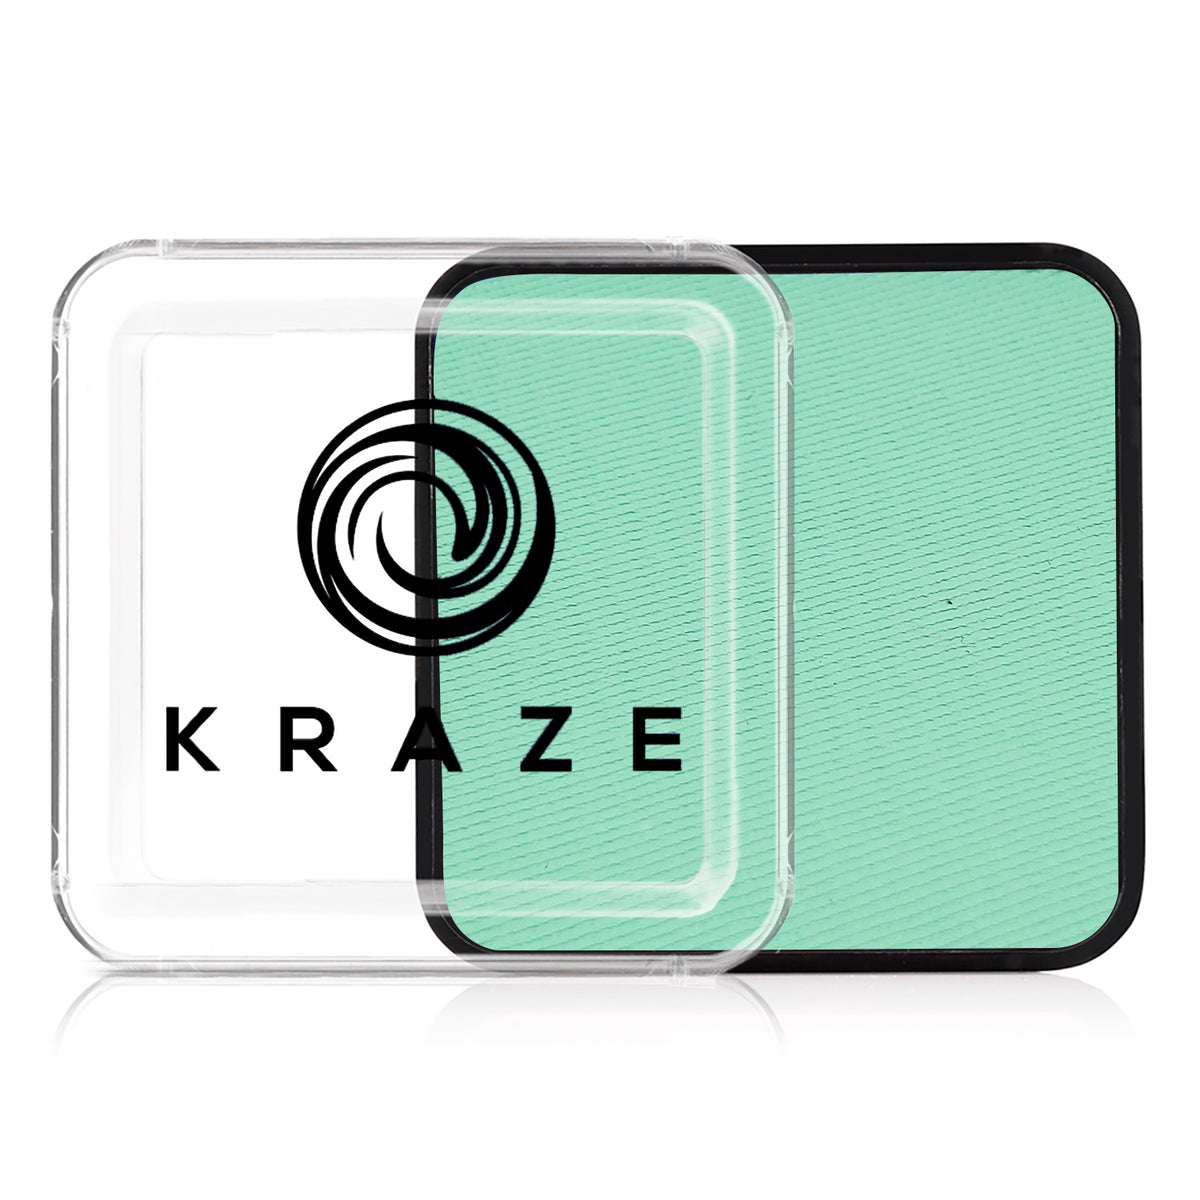 Kraze Square - Mint Green (25 gm)